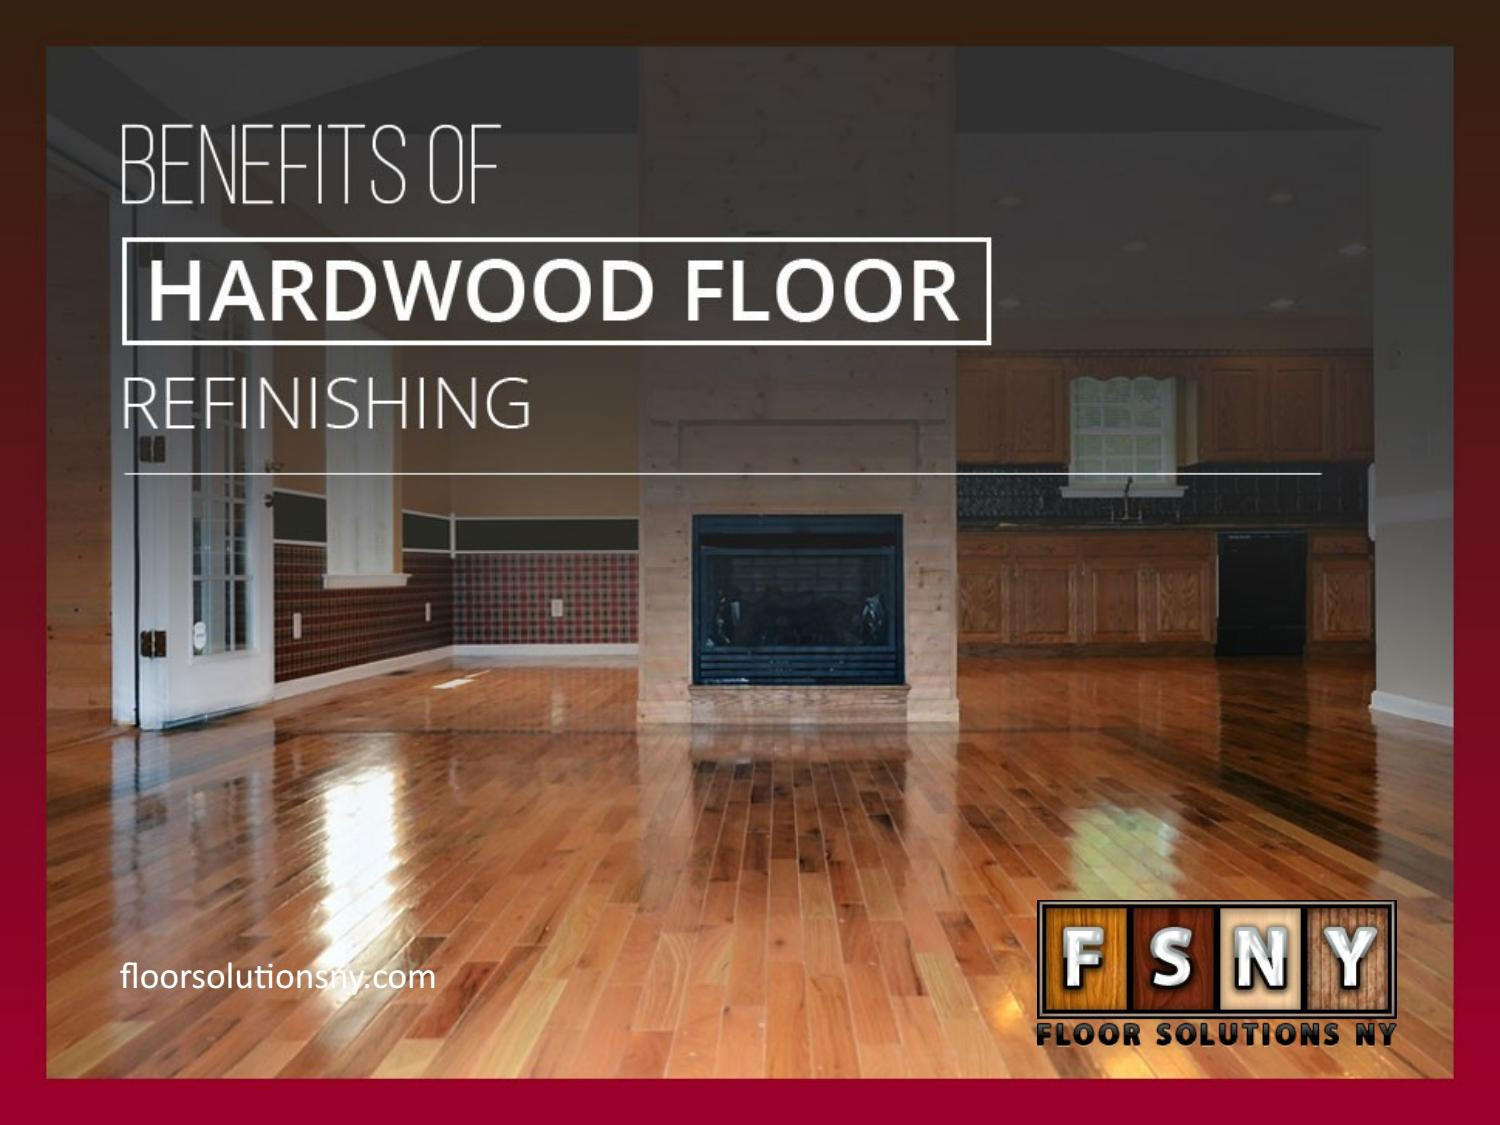 14 Wonderful Hardwood Flooring Refinishing Service 2024 free download hardwood flooring refinishing service of benefits of hardwood floor refinishing by floor solutions inc issuu with page 1